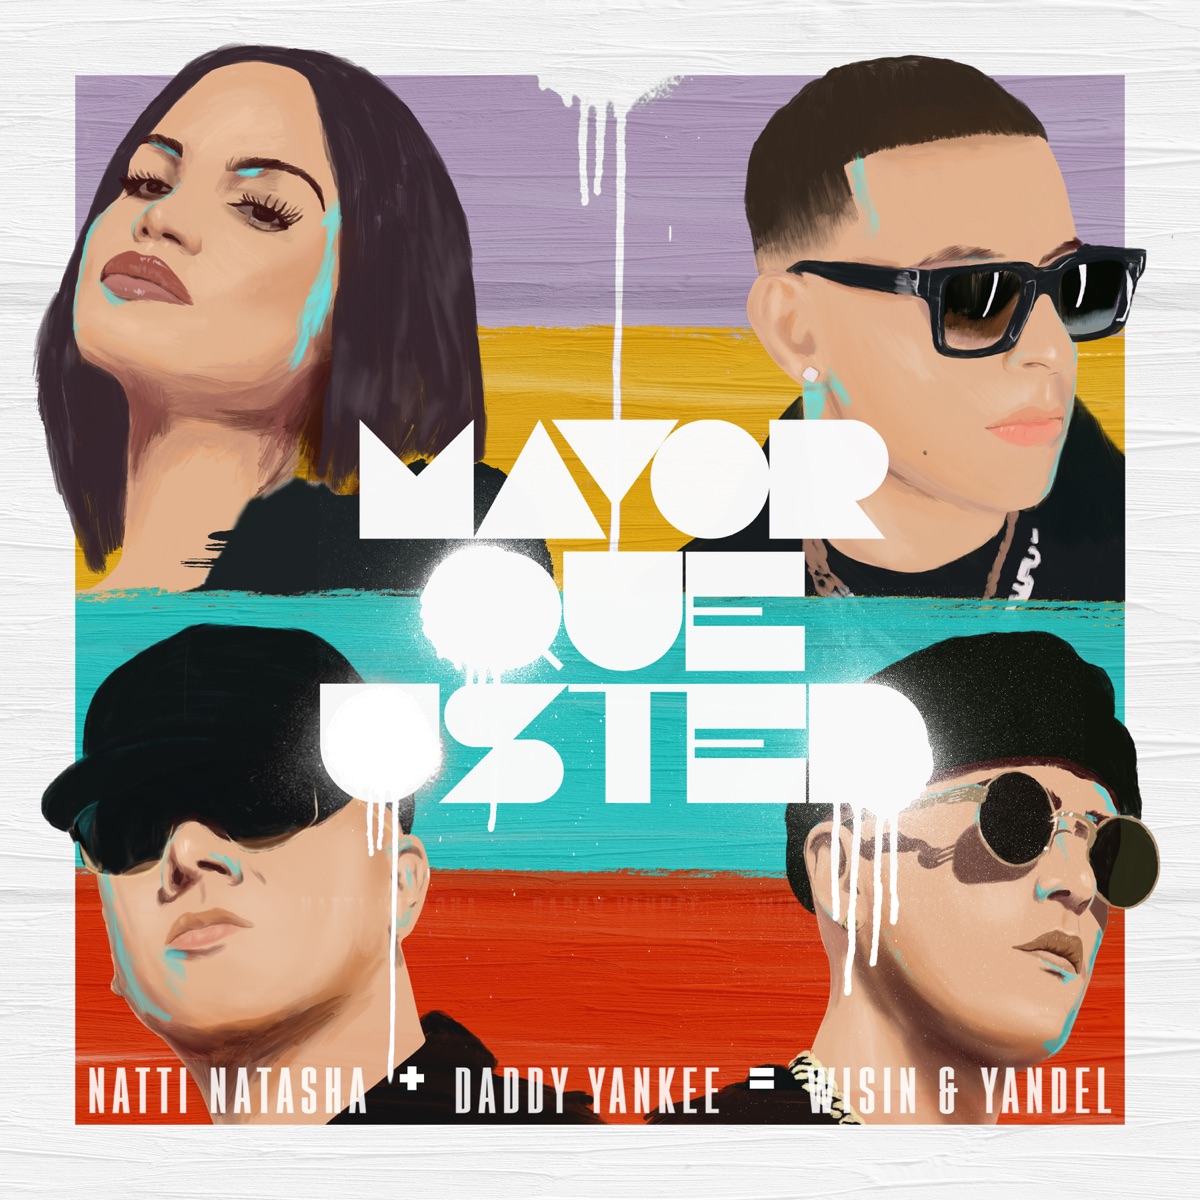 Mayor Que Usted - Single - Album by NATTI NATASHA, Daddy Yankee & Wisin &  Yandel - Apple Music